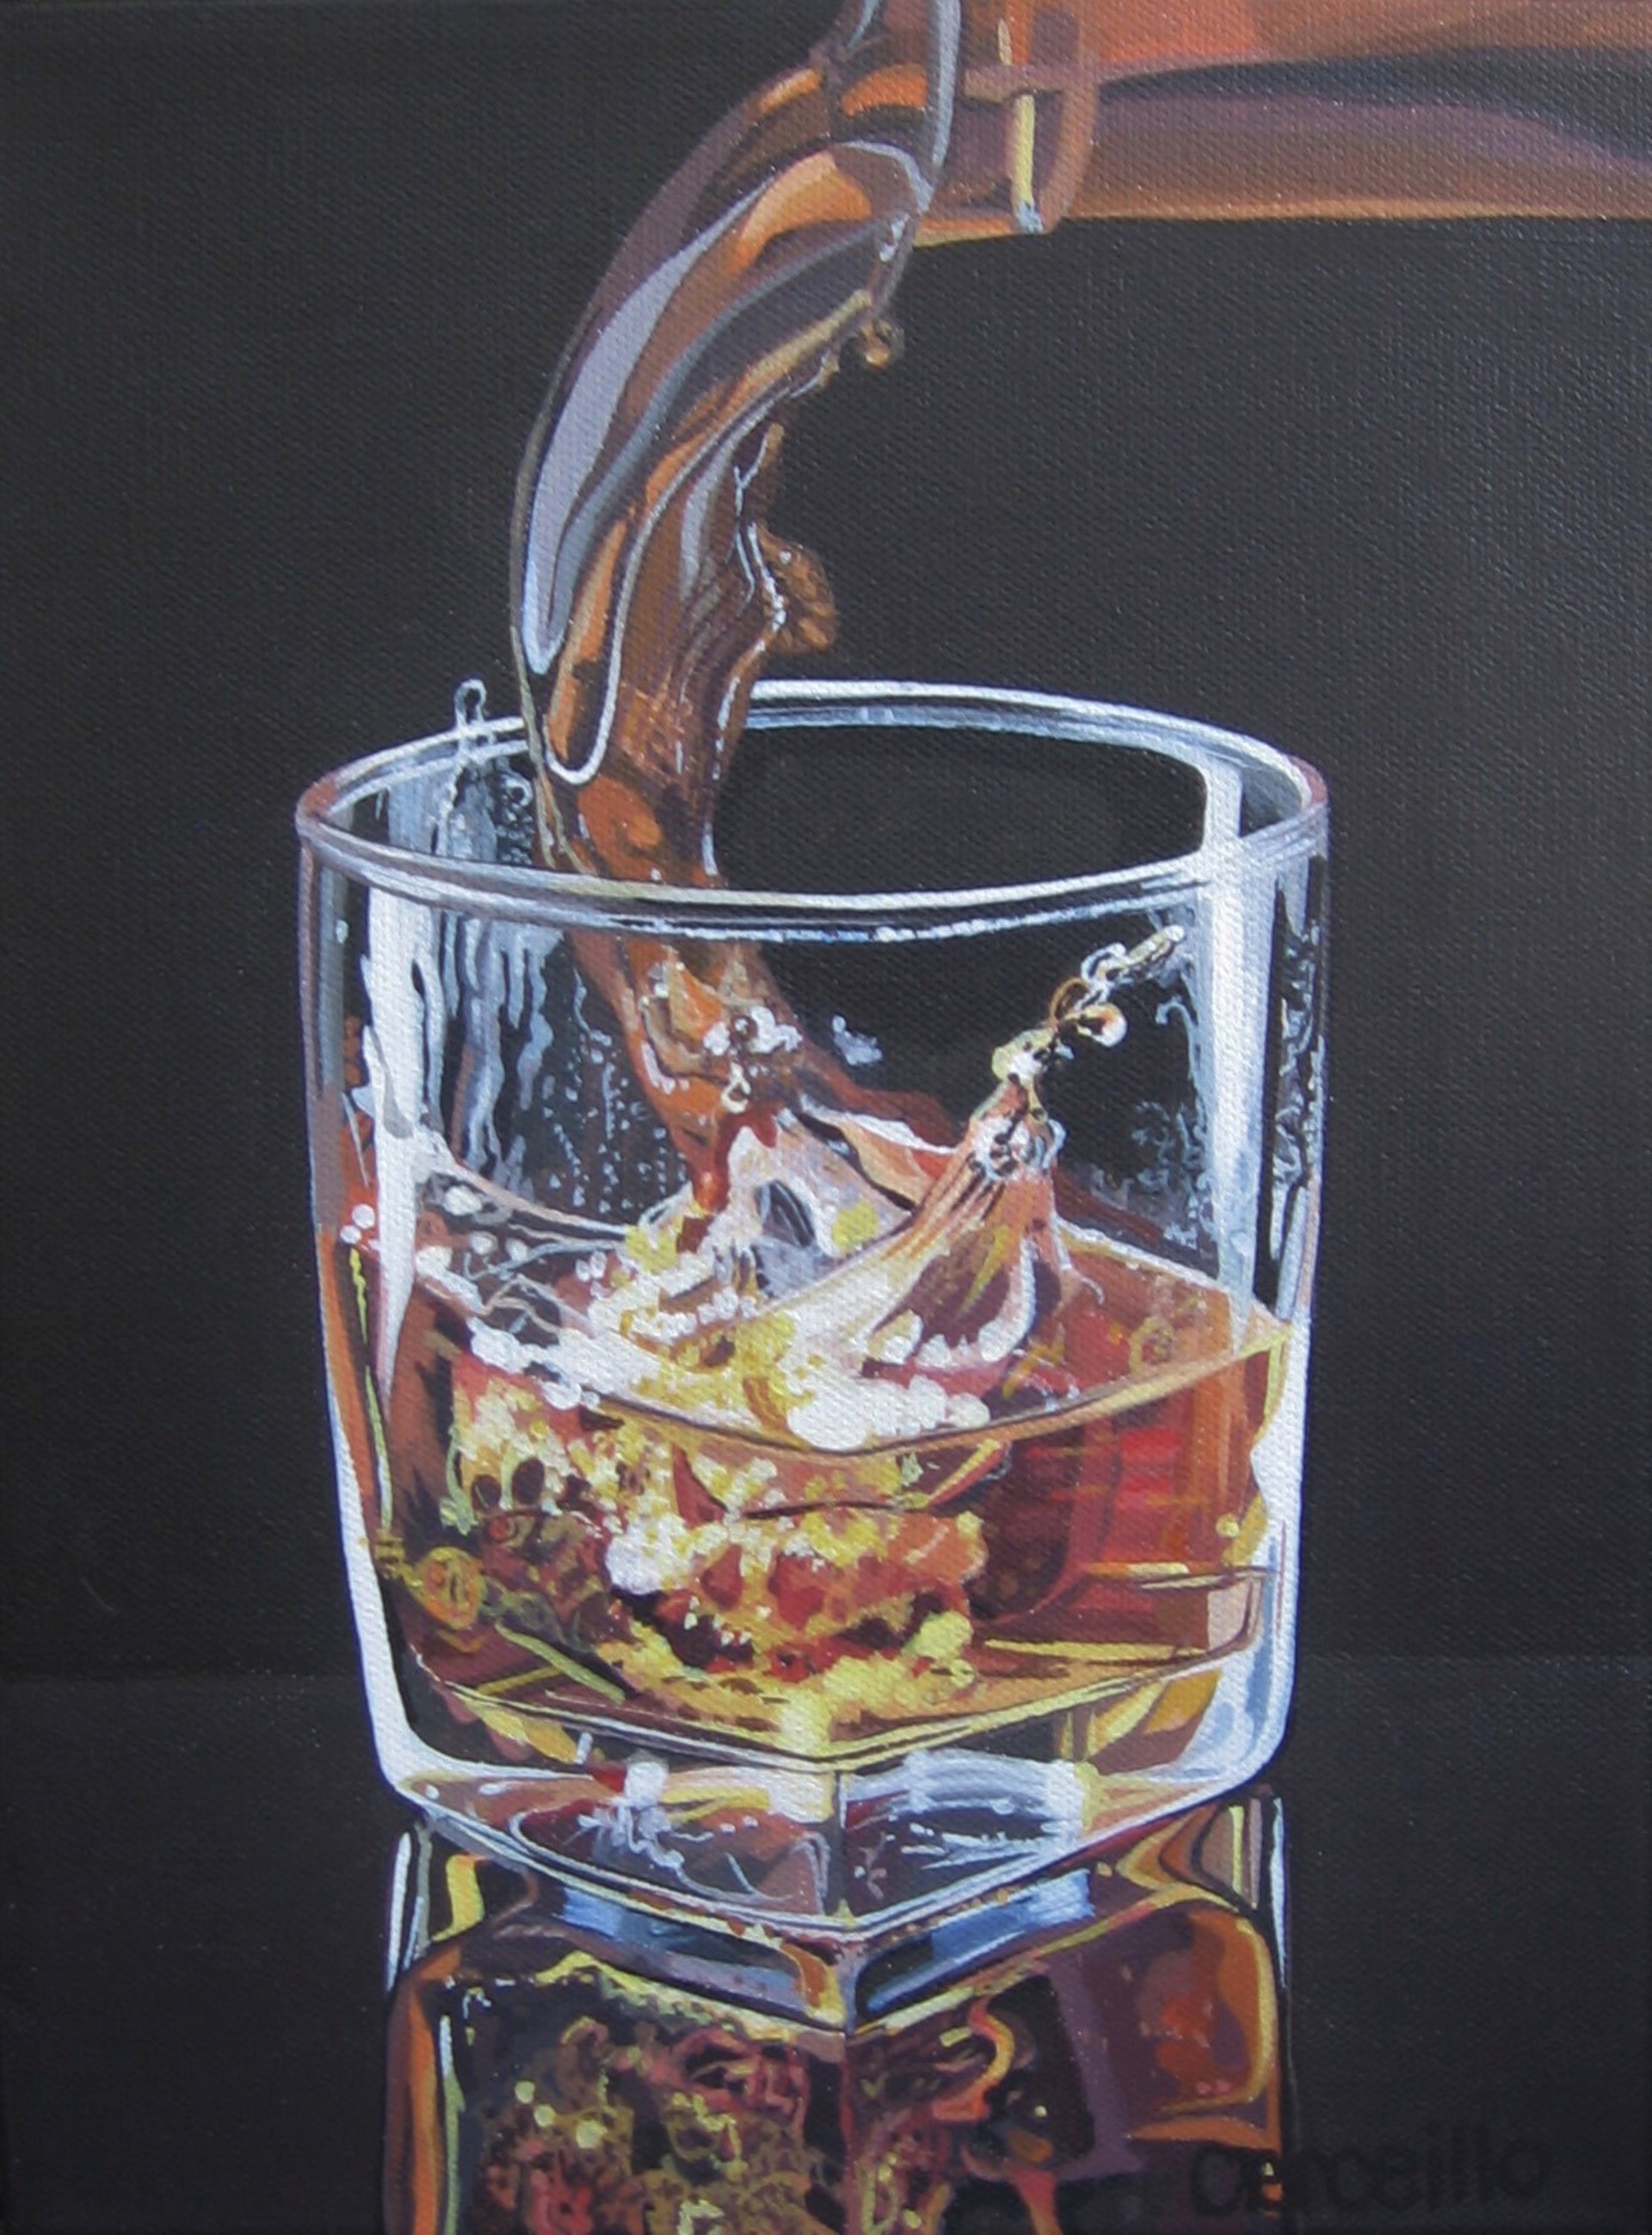 Scotch, Rocks with a Splash by Stephen Cerceillo